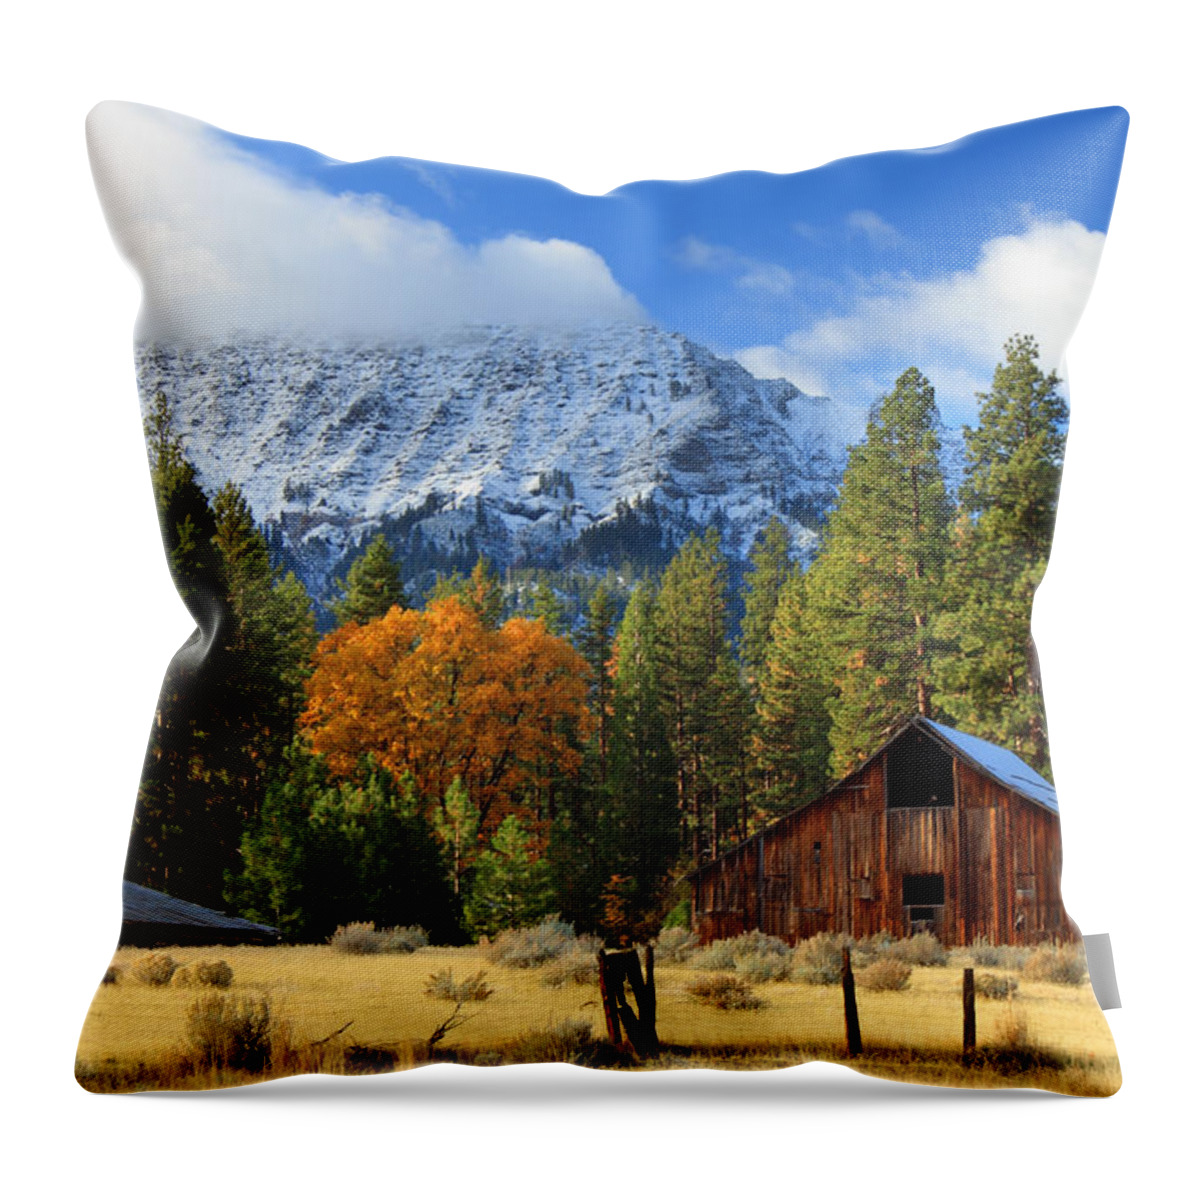 Autumn Throw Pillow featuring the photograph Autumn Barn At Thompson Peak by James Eddy